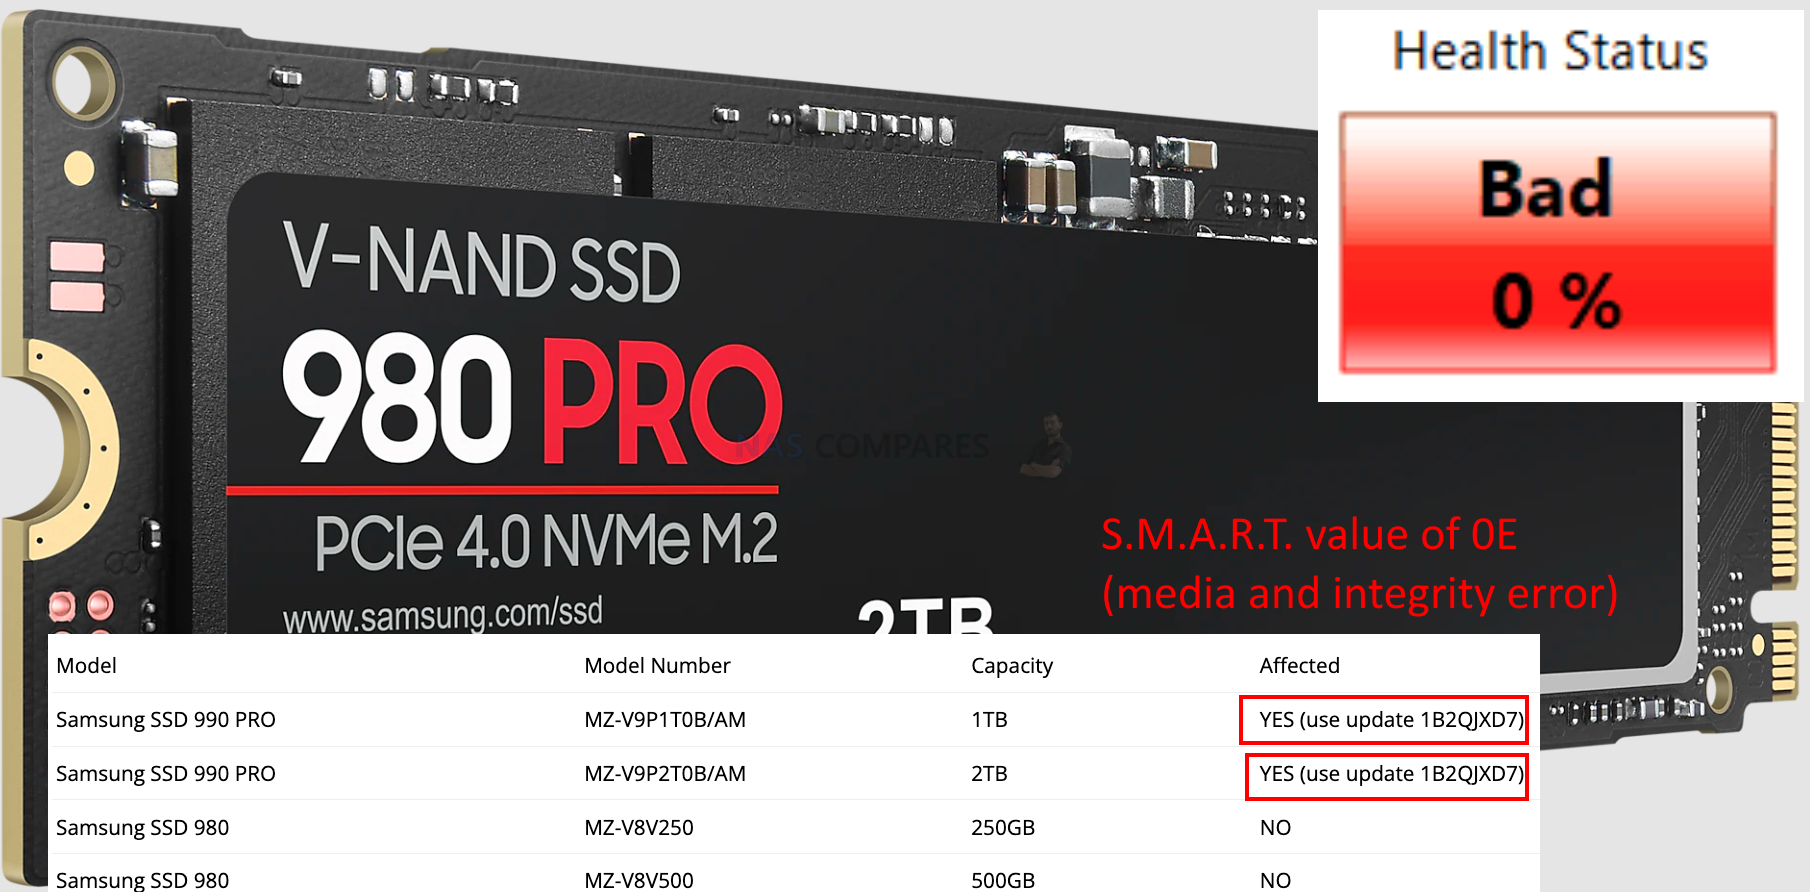 Samsung 2TB 980 PRO PCIe 4.0 x4 M.2 Internal SSD MZ-V8P2T0CW B&H